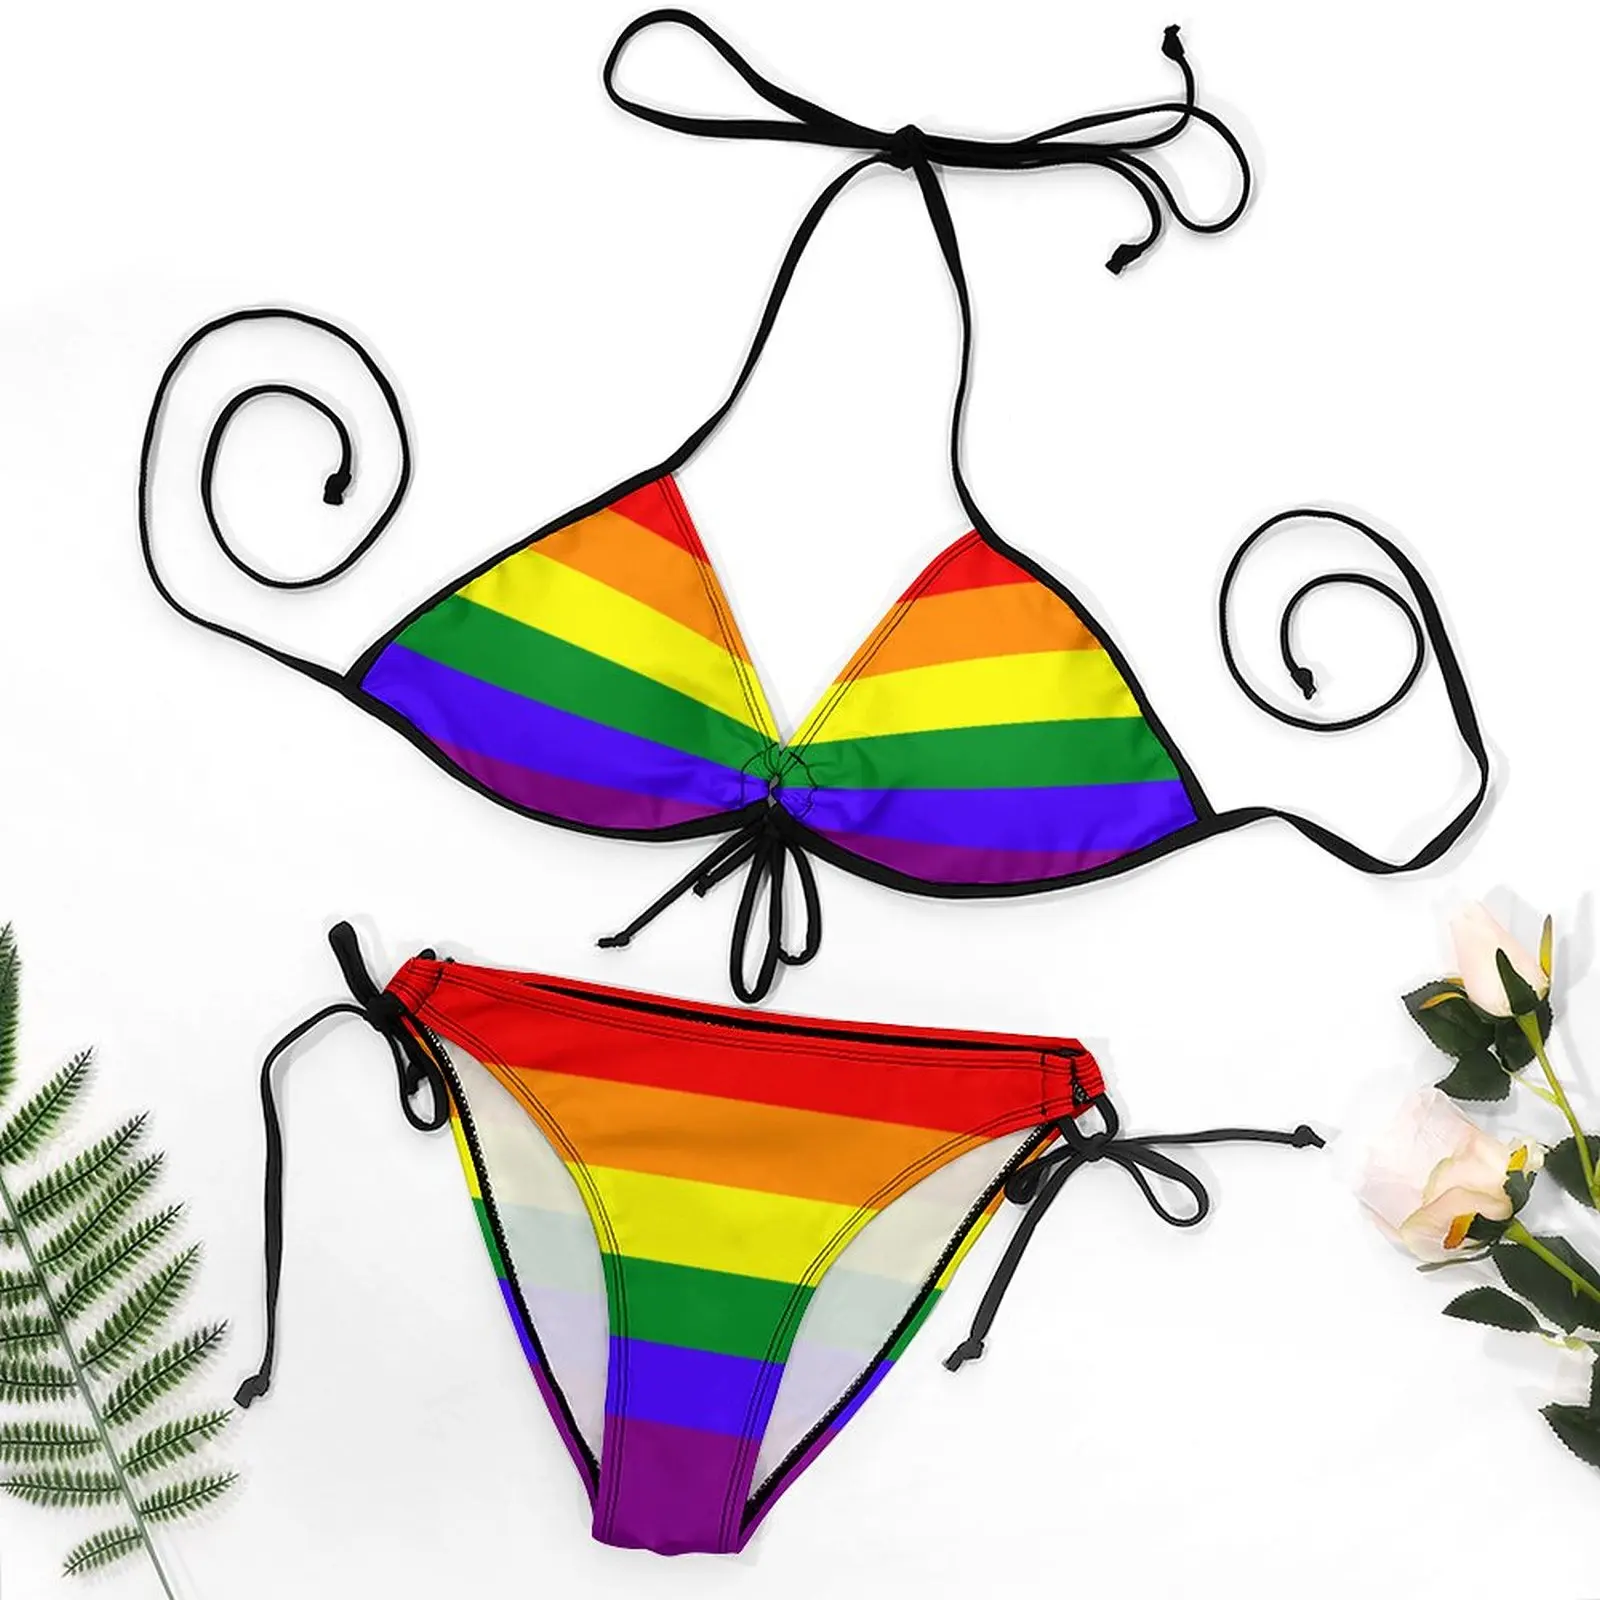 

Bikini Rainbow LGBTA Flag Top Quality Exotic Women's Bikinis Humor Graphic High Quality Swimsuit Beach